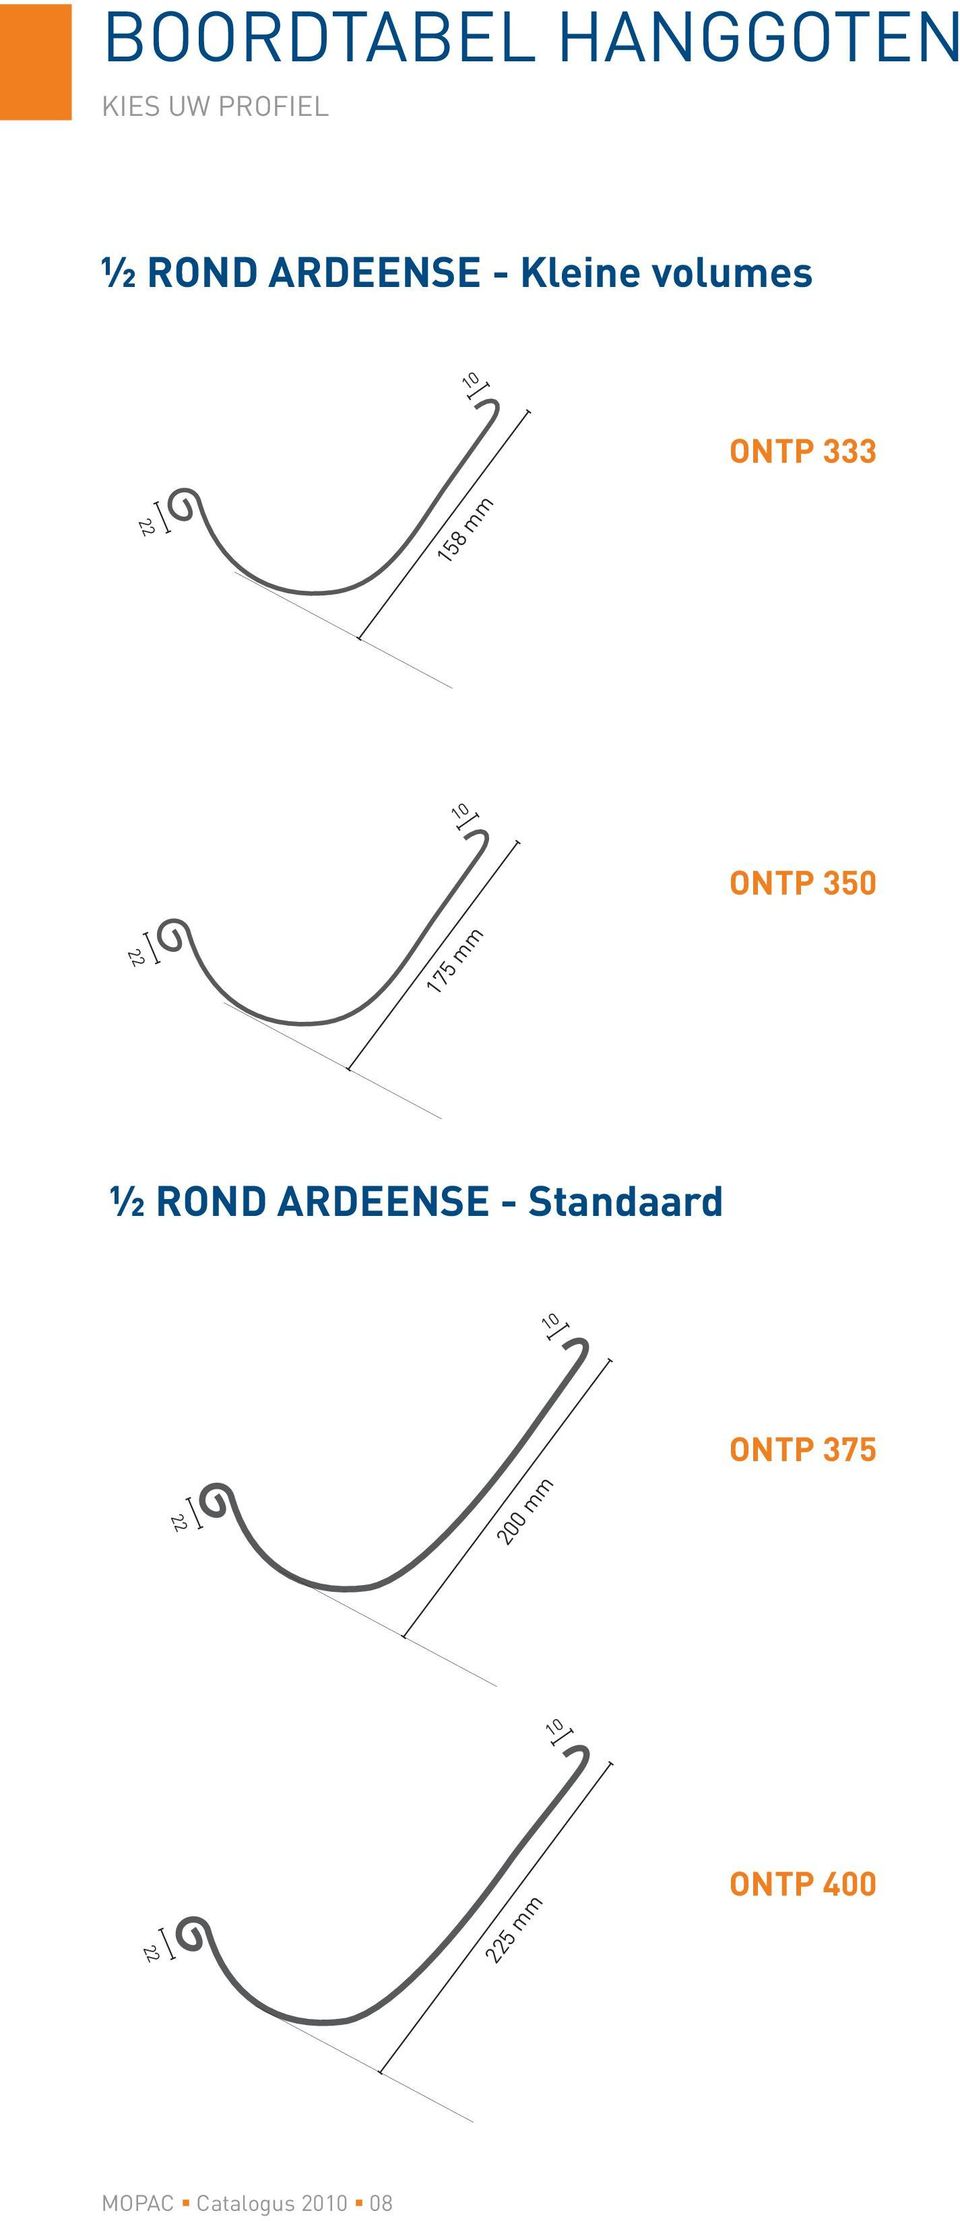 22 175 mm ½ ROND ardeense - Standaard 10 22 200 mm